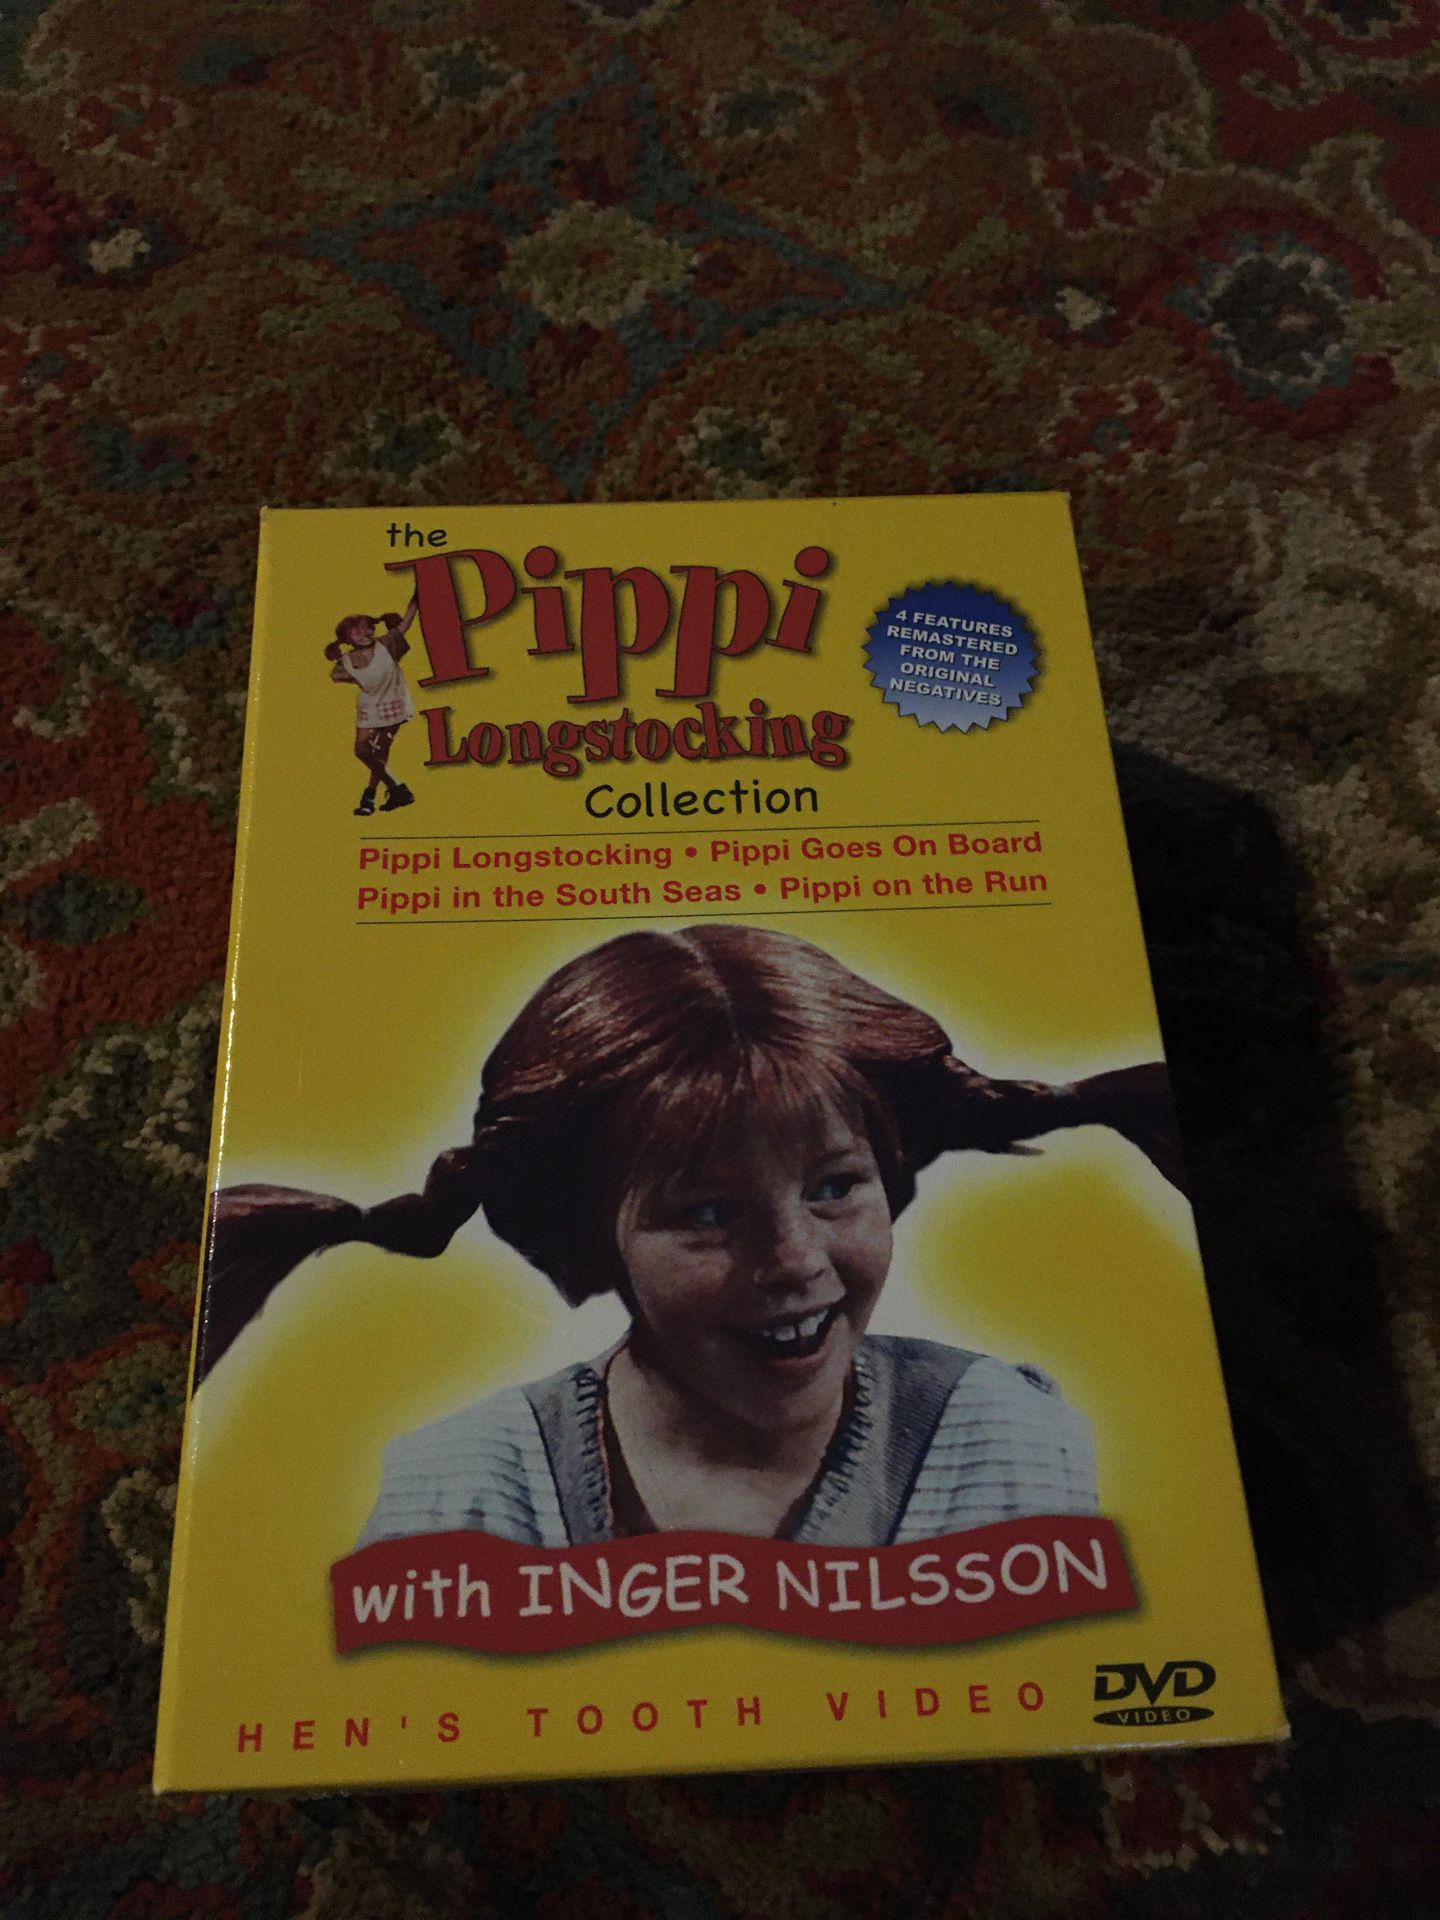 Pippi Longstocking Collection DVD $30 OBO